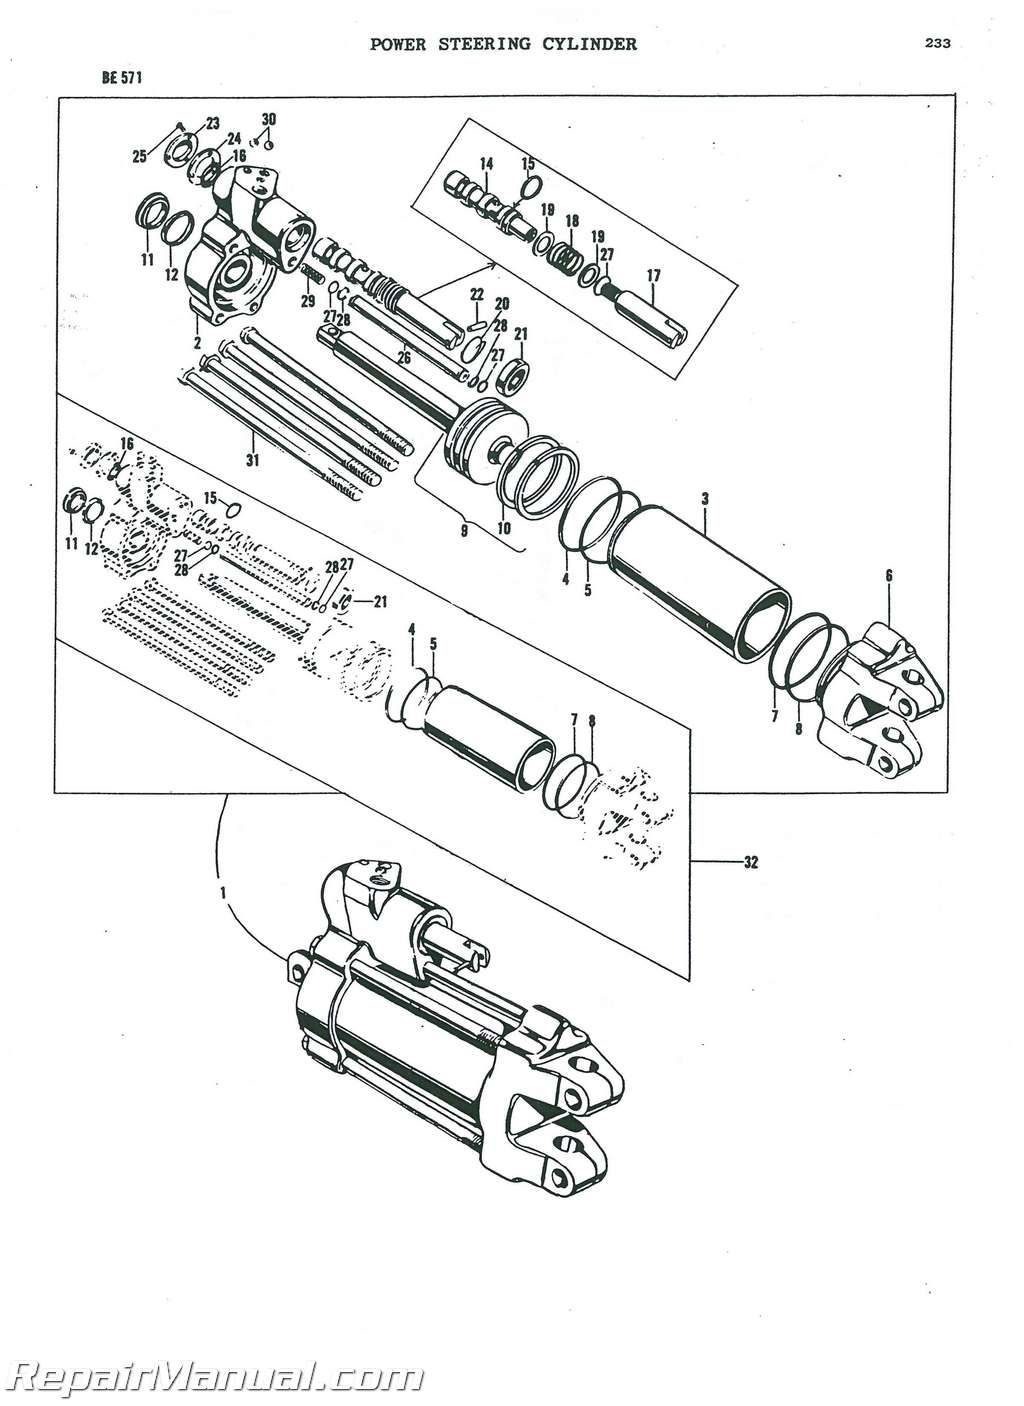 massey ferguson 165 parts manual pdf